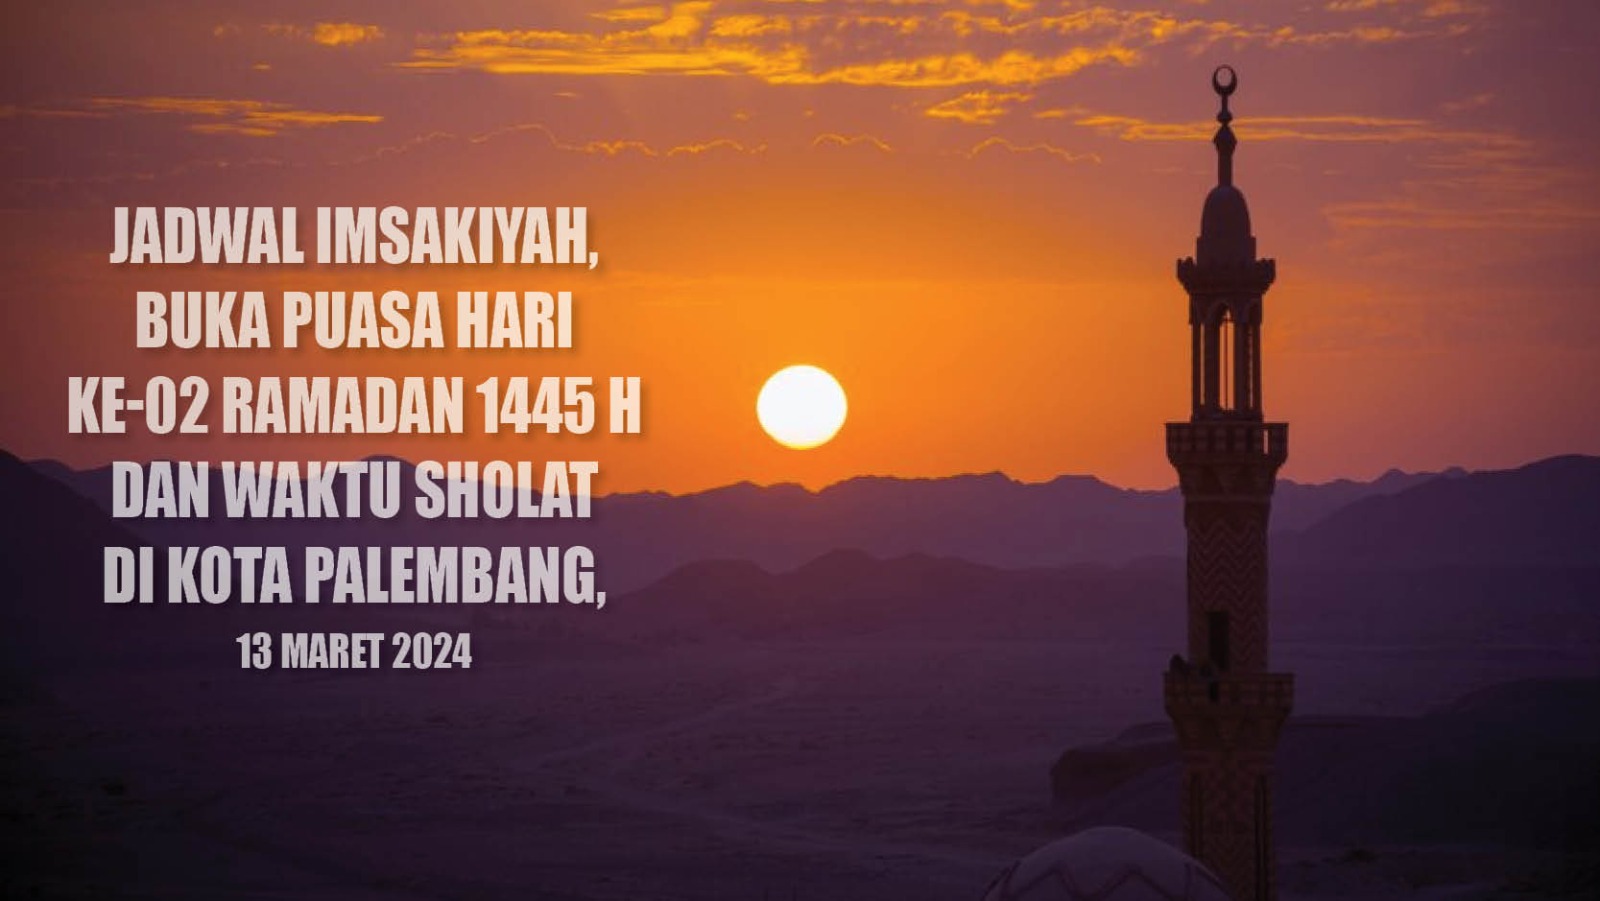 Jam Berapa Jadwal Imsakiyah dan Buka Puasa Hari Ke-02 Ramadan 1445 H di Kota Palembang? Cek di Sini Infonya